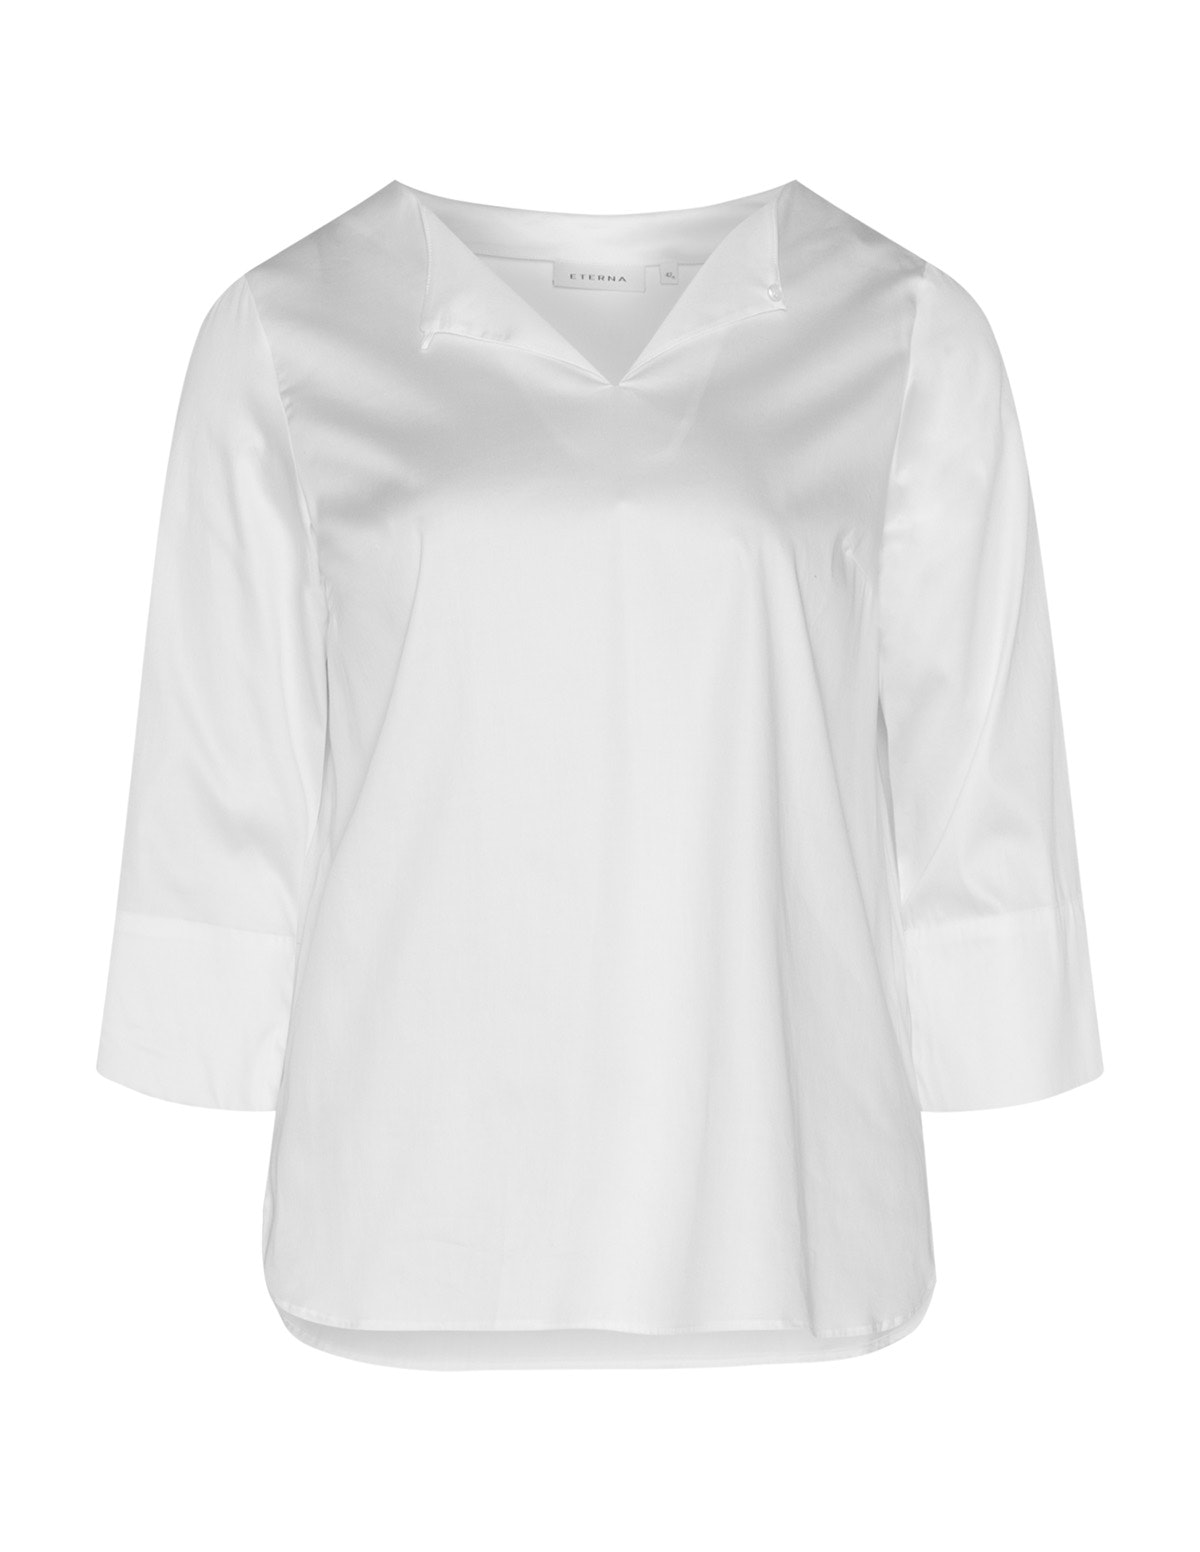 Eterna Shirts & Blouses - Buy Plus Size Fashion from navabi